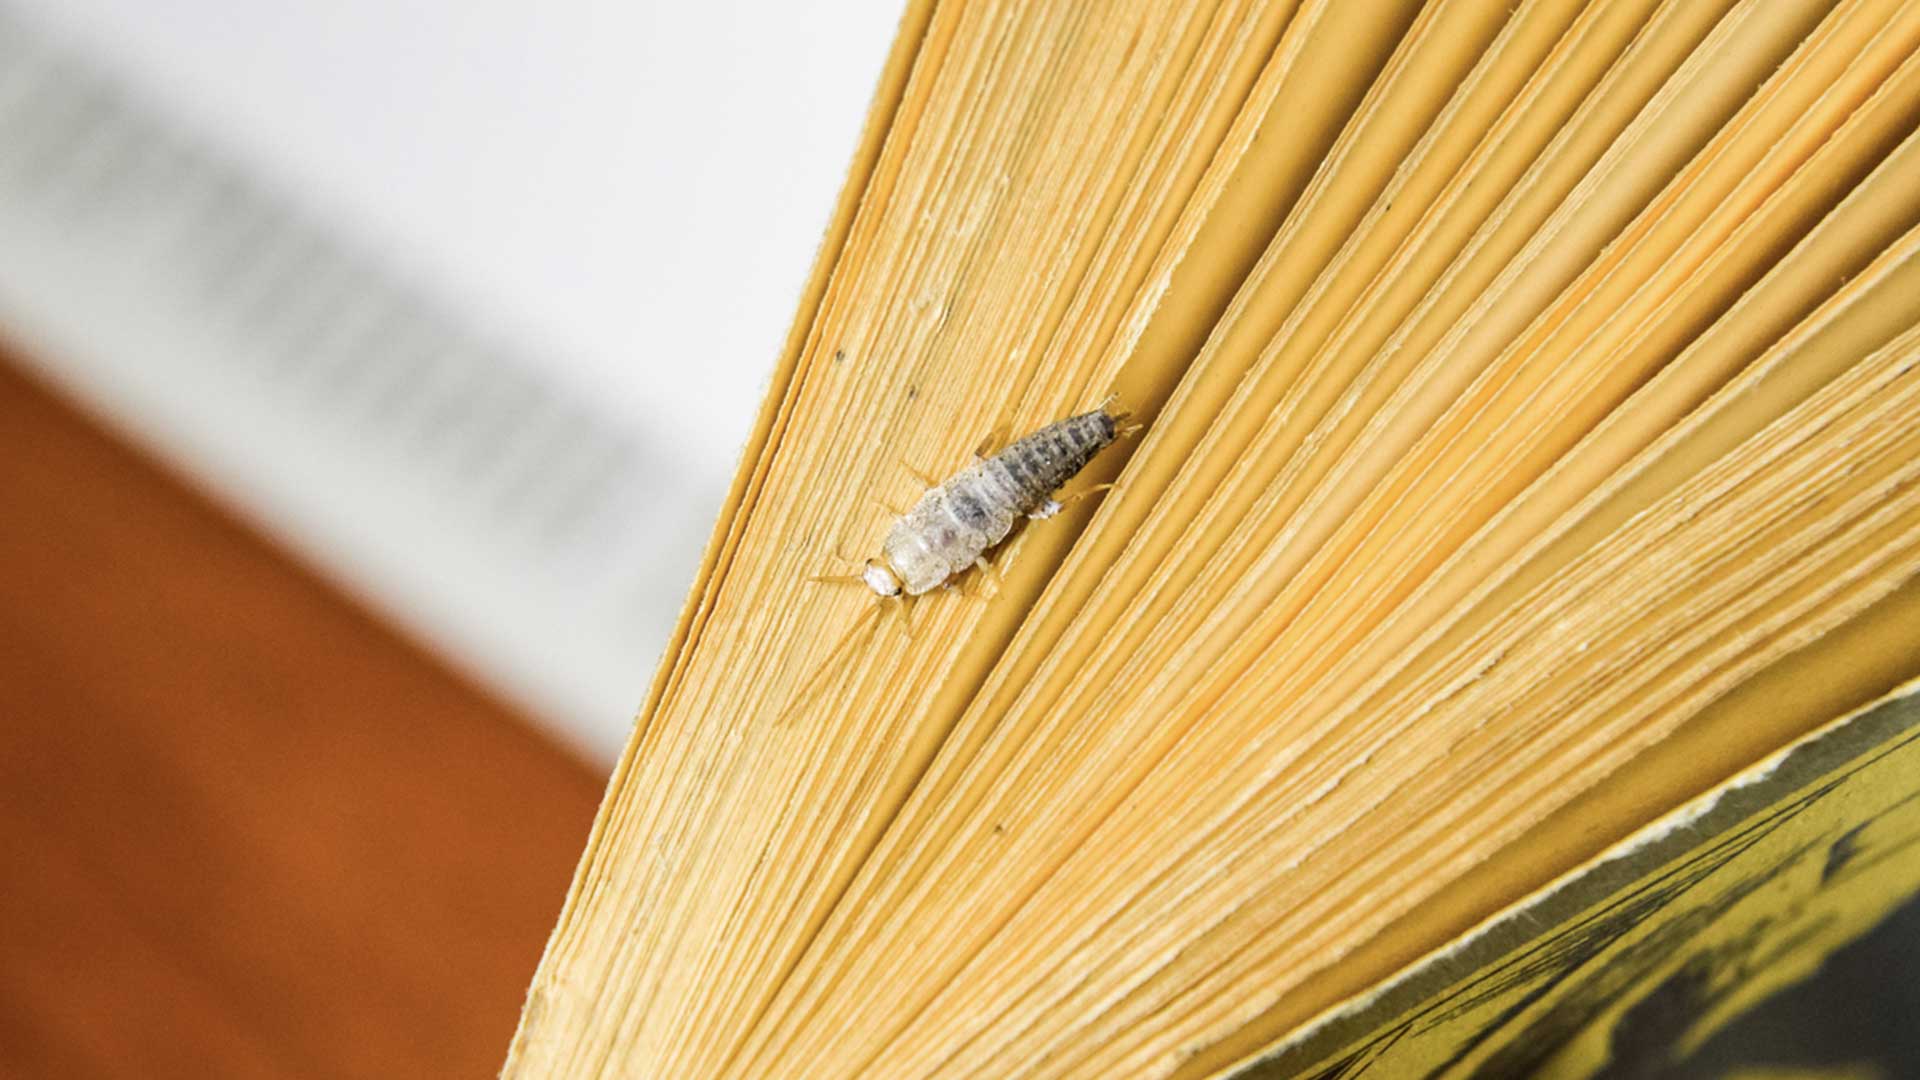 silverfish bug crawling on old book